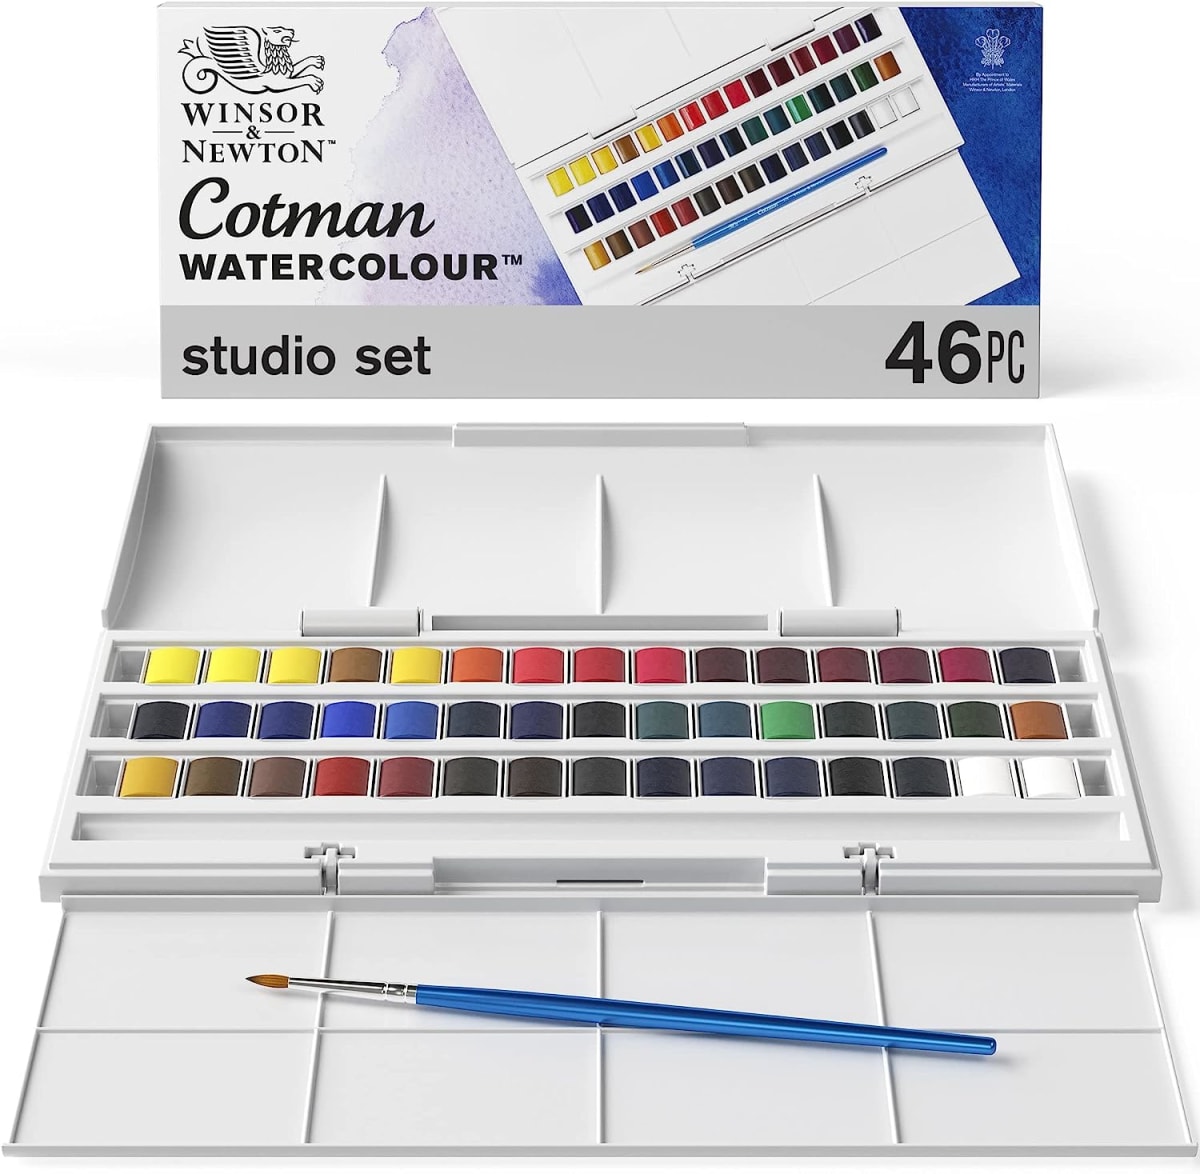 Cotman Watercolor Studio Set